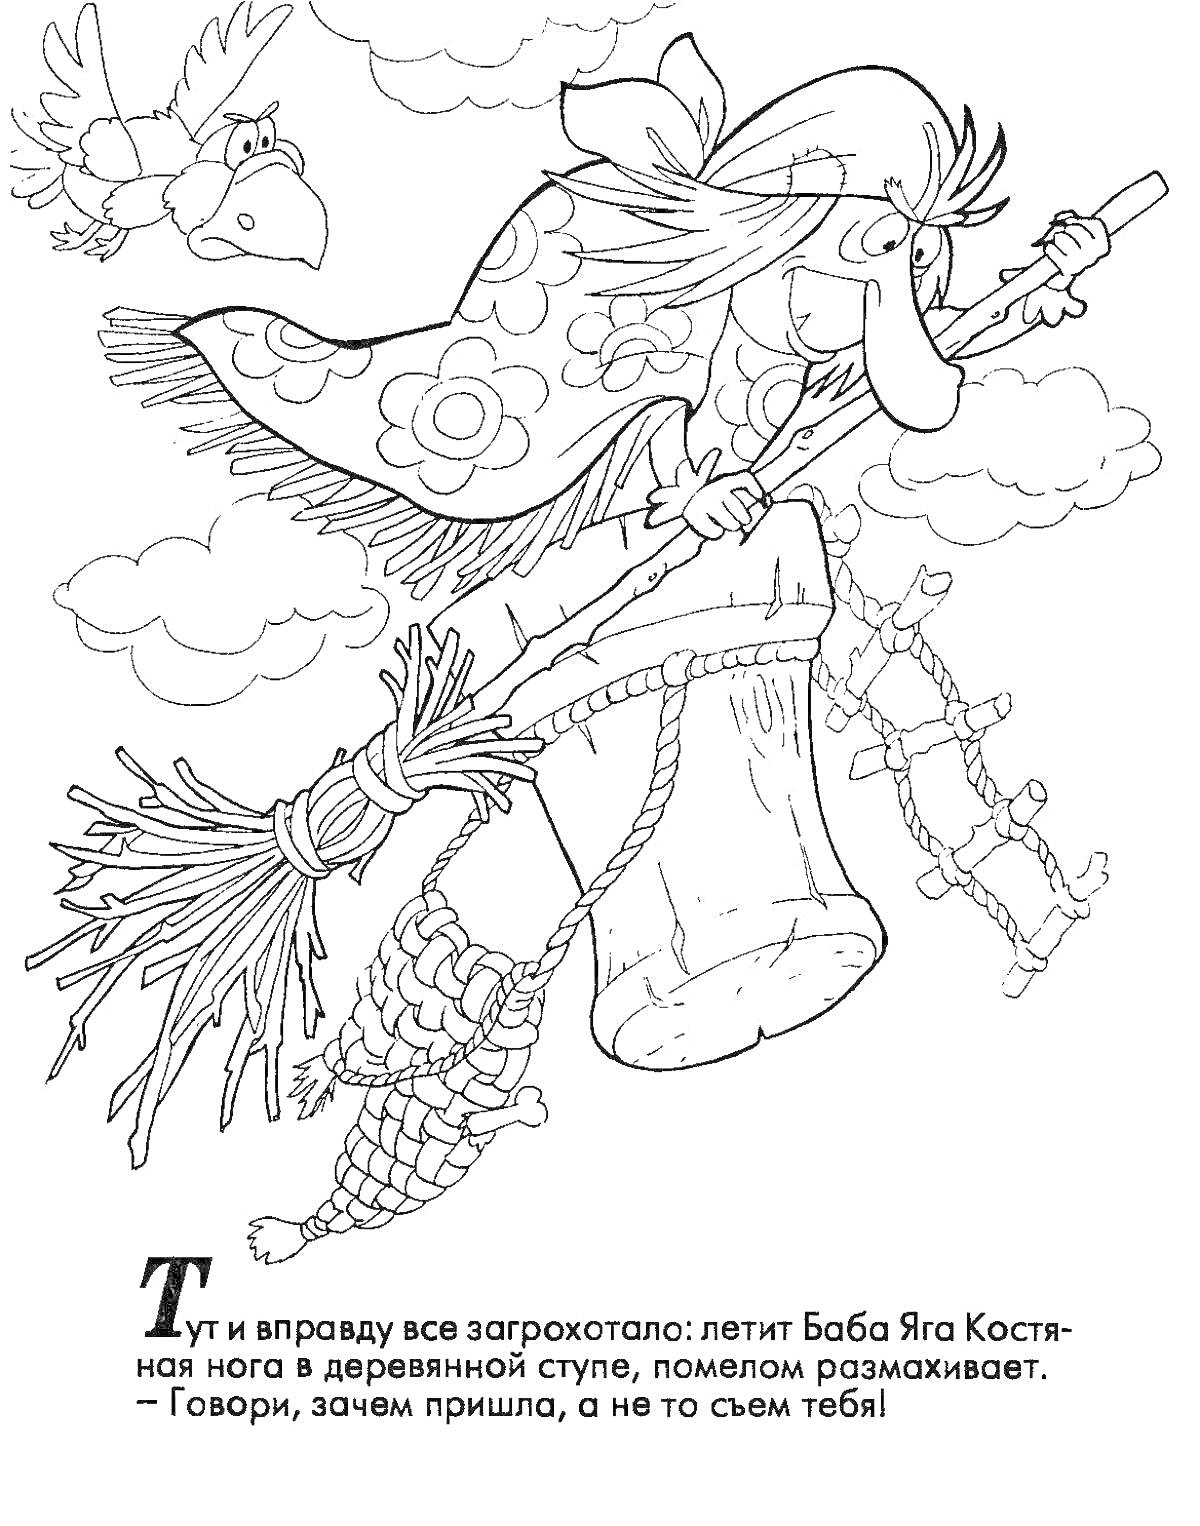 Раскраска Баба Яга летит в ступе с метлой, сопровождаемая птицей, на фоне облаков и текста